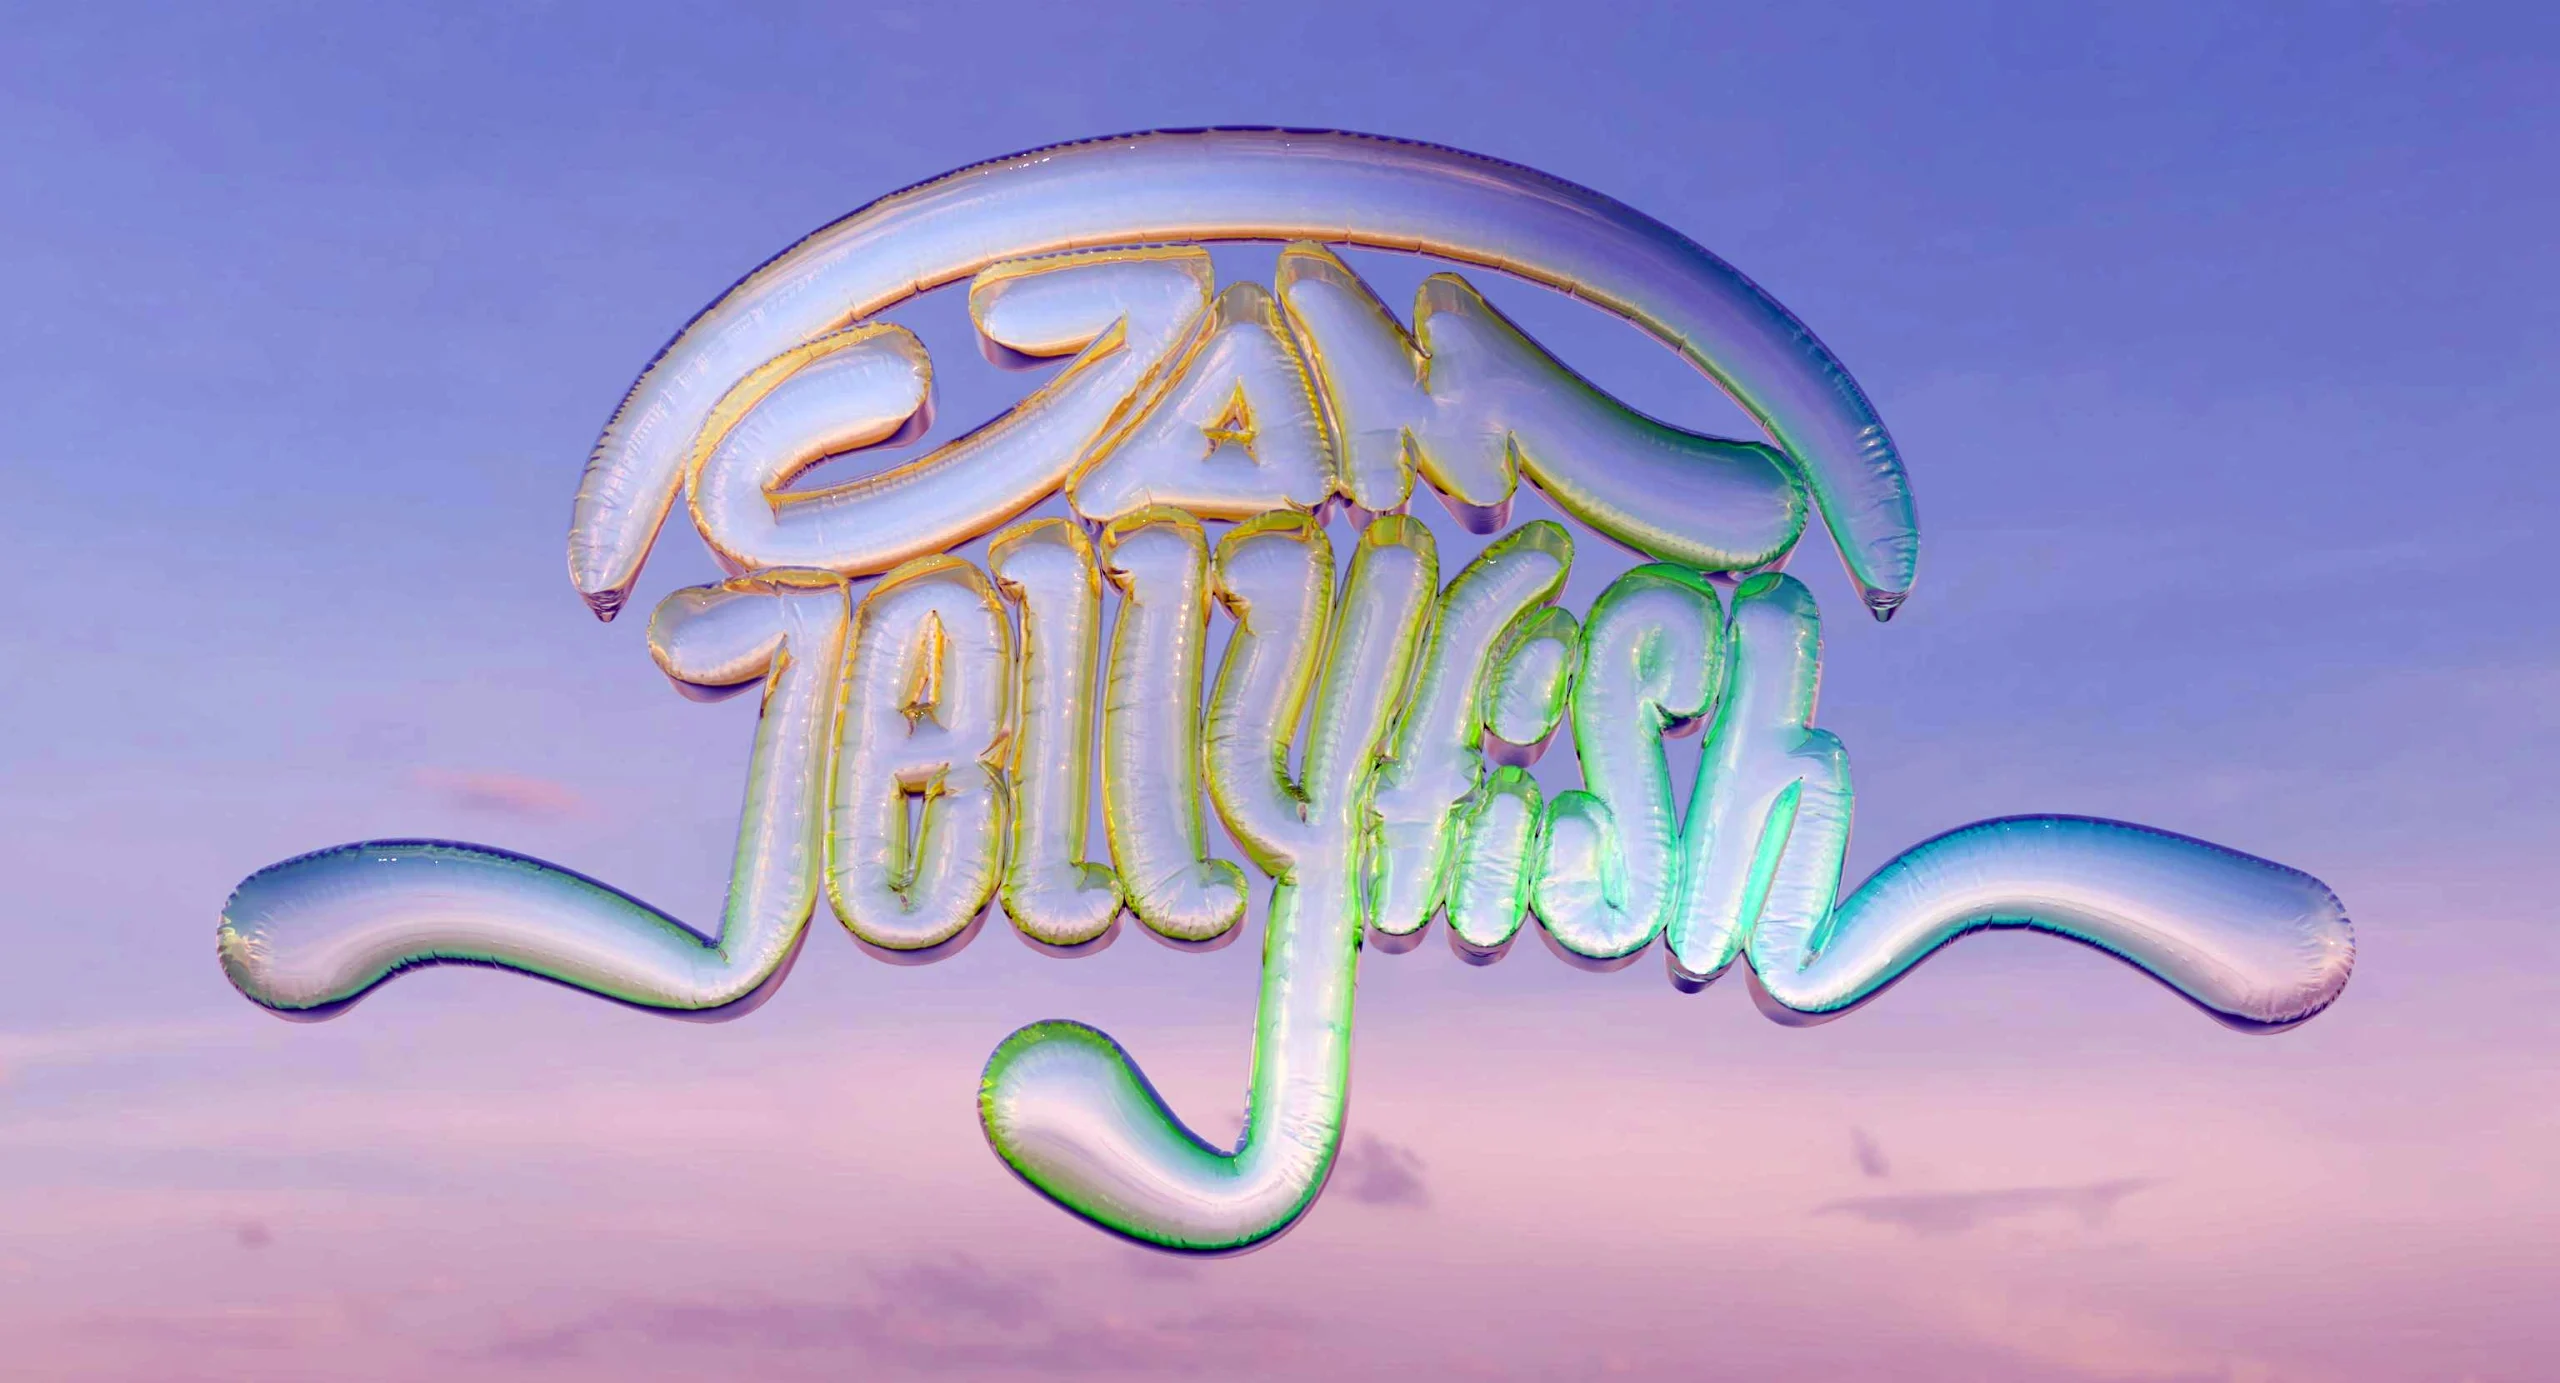 jam jellyfish 3d